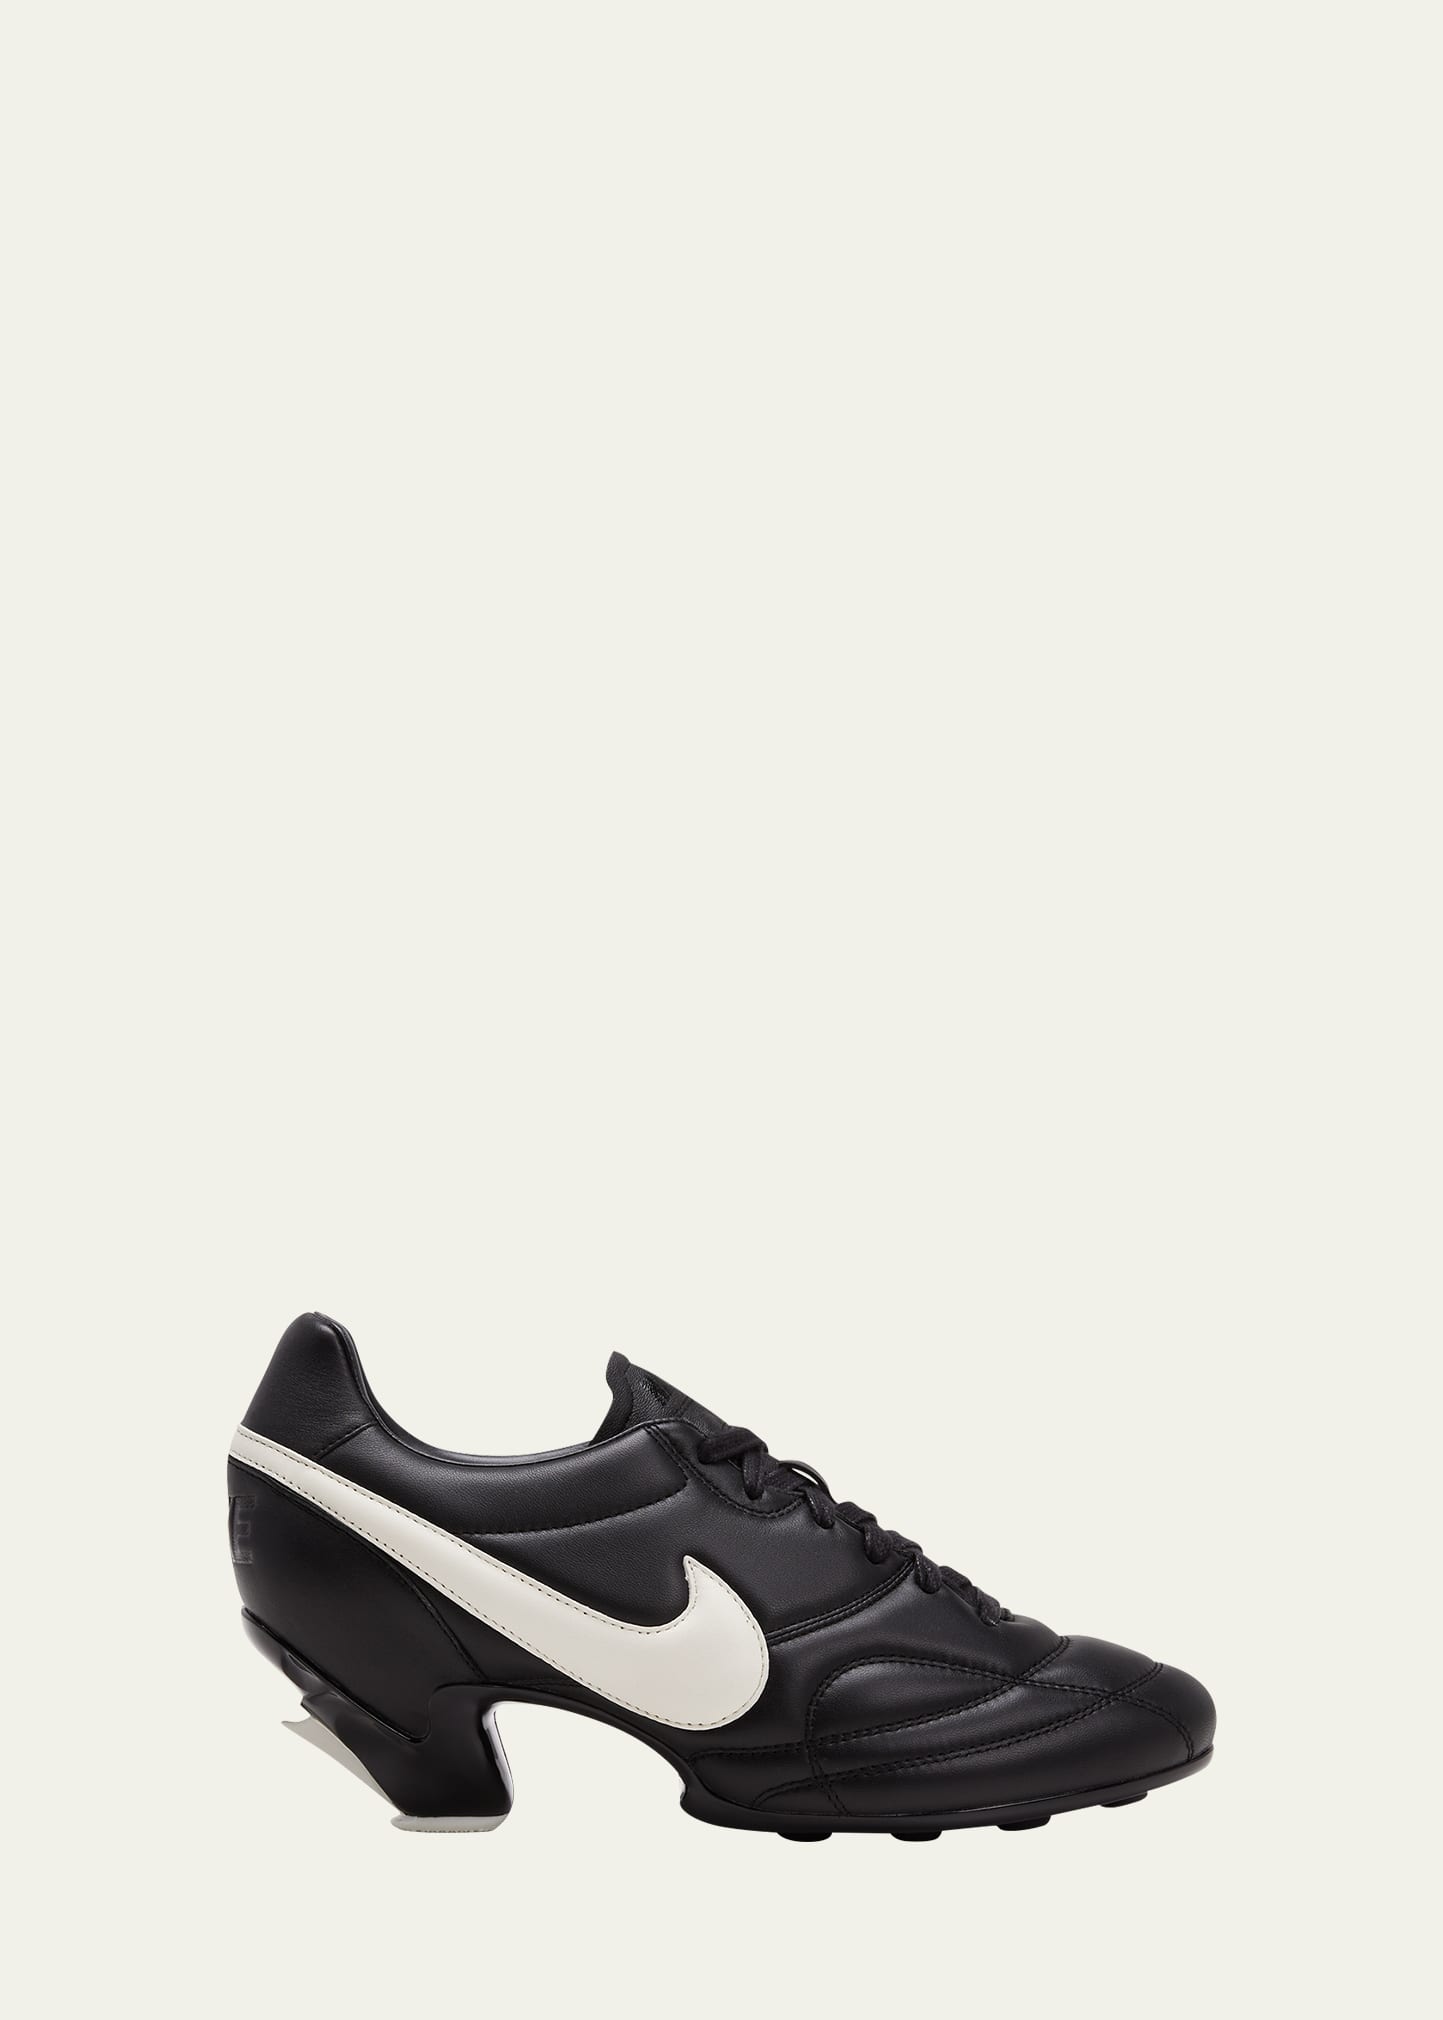 Comme Des Garcons x x Nike Bicolor Leather Sneaker Pumps - Bergdorf Goodman